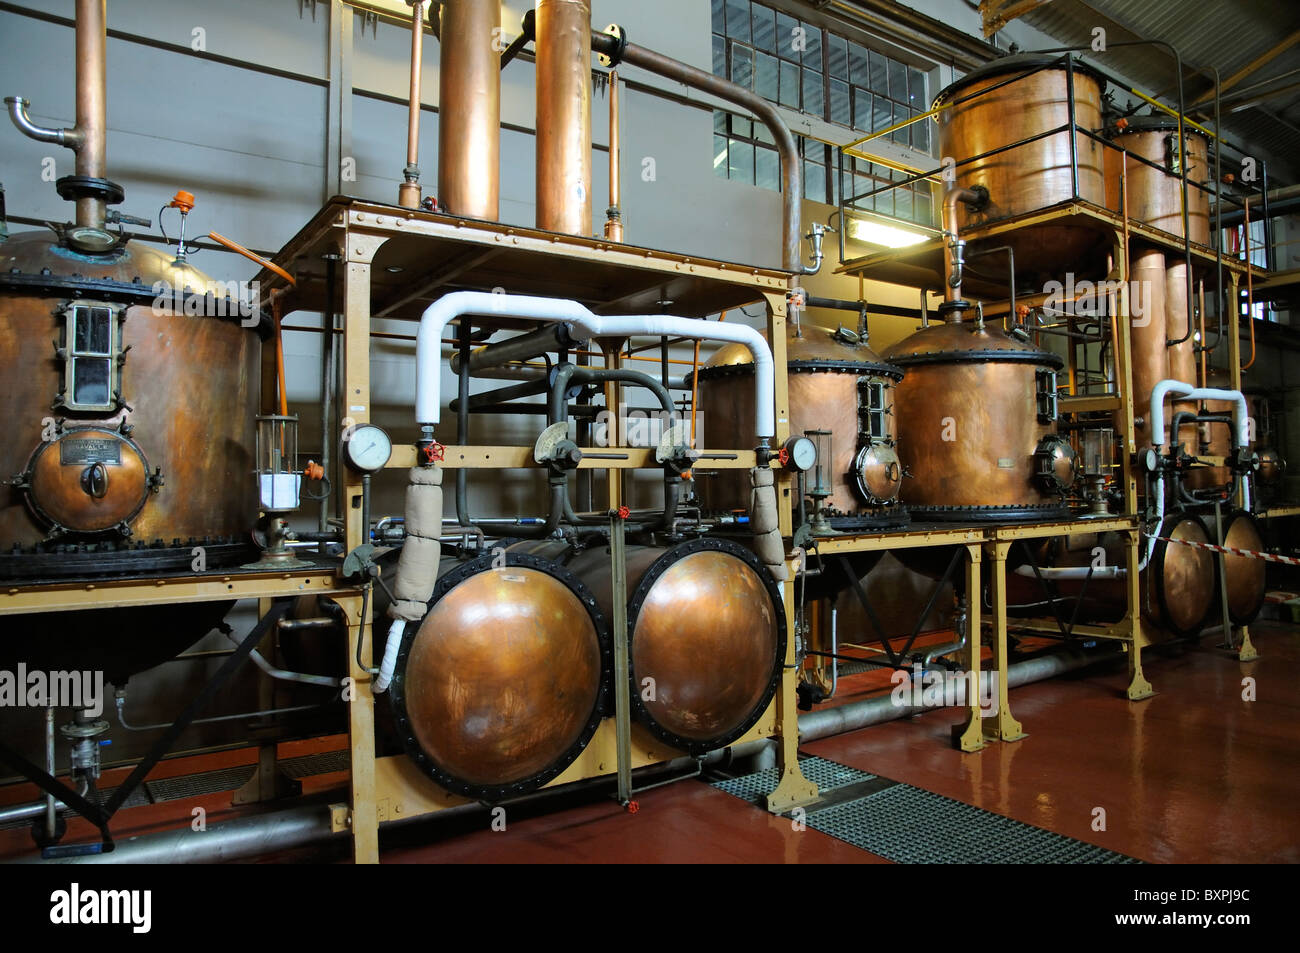 Van Ryan's Brandy Distillery in the Vlottenburg Valley near Stellenbosch Cape Province South Africa Stock Photo